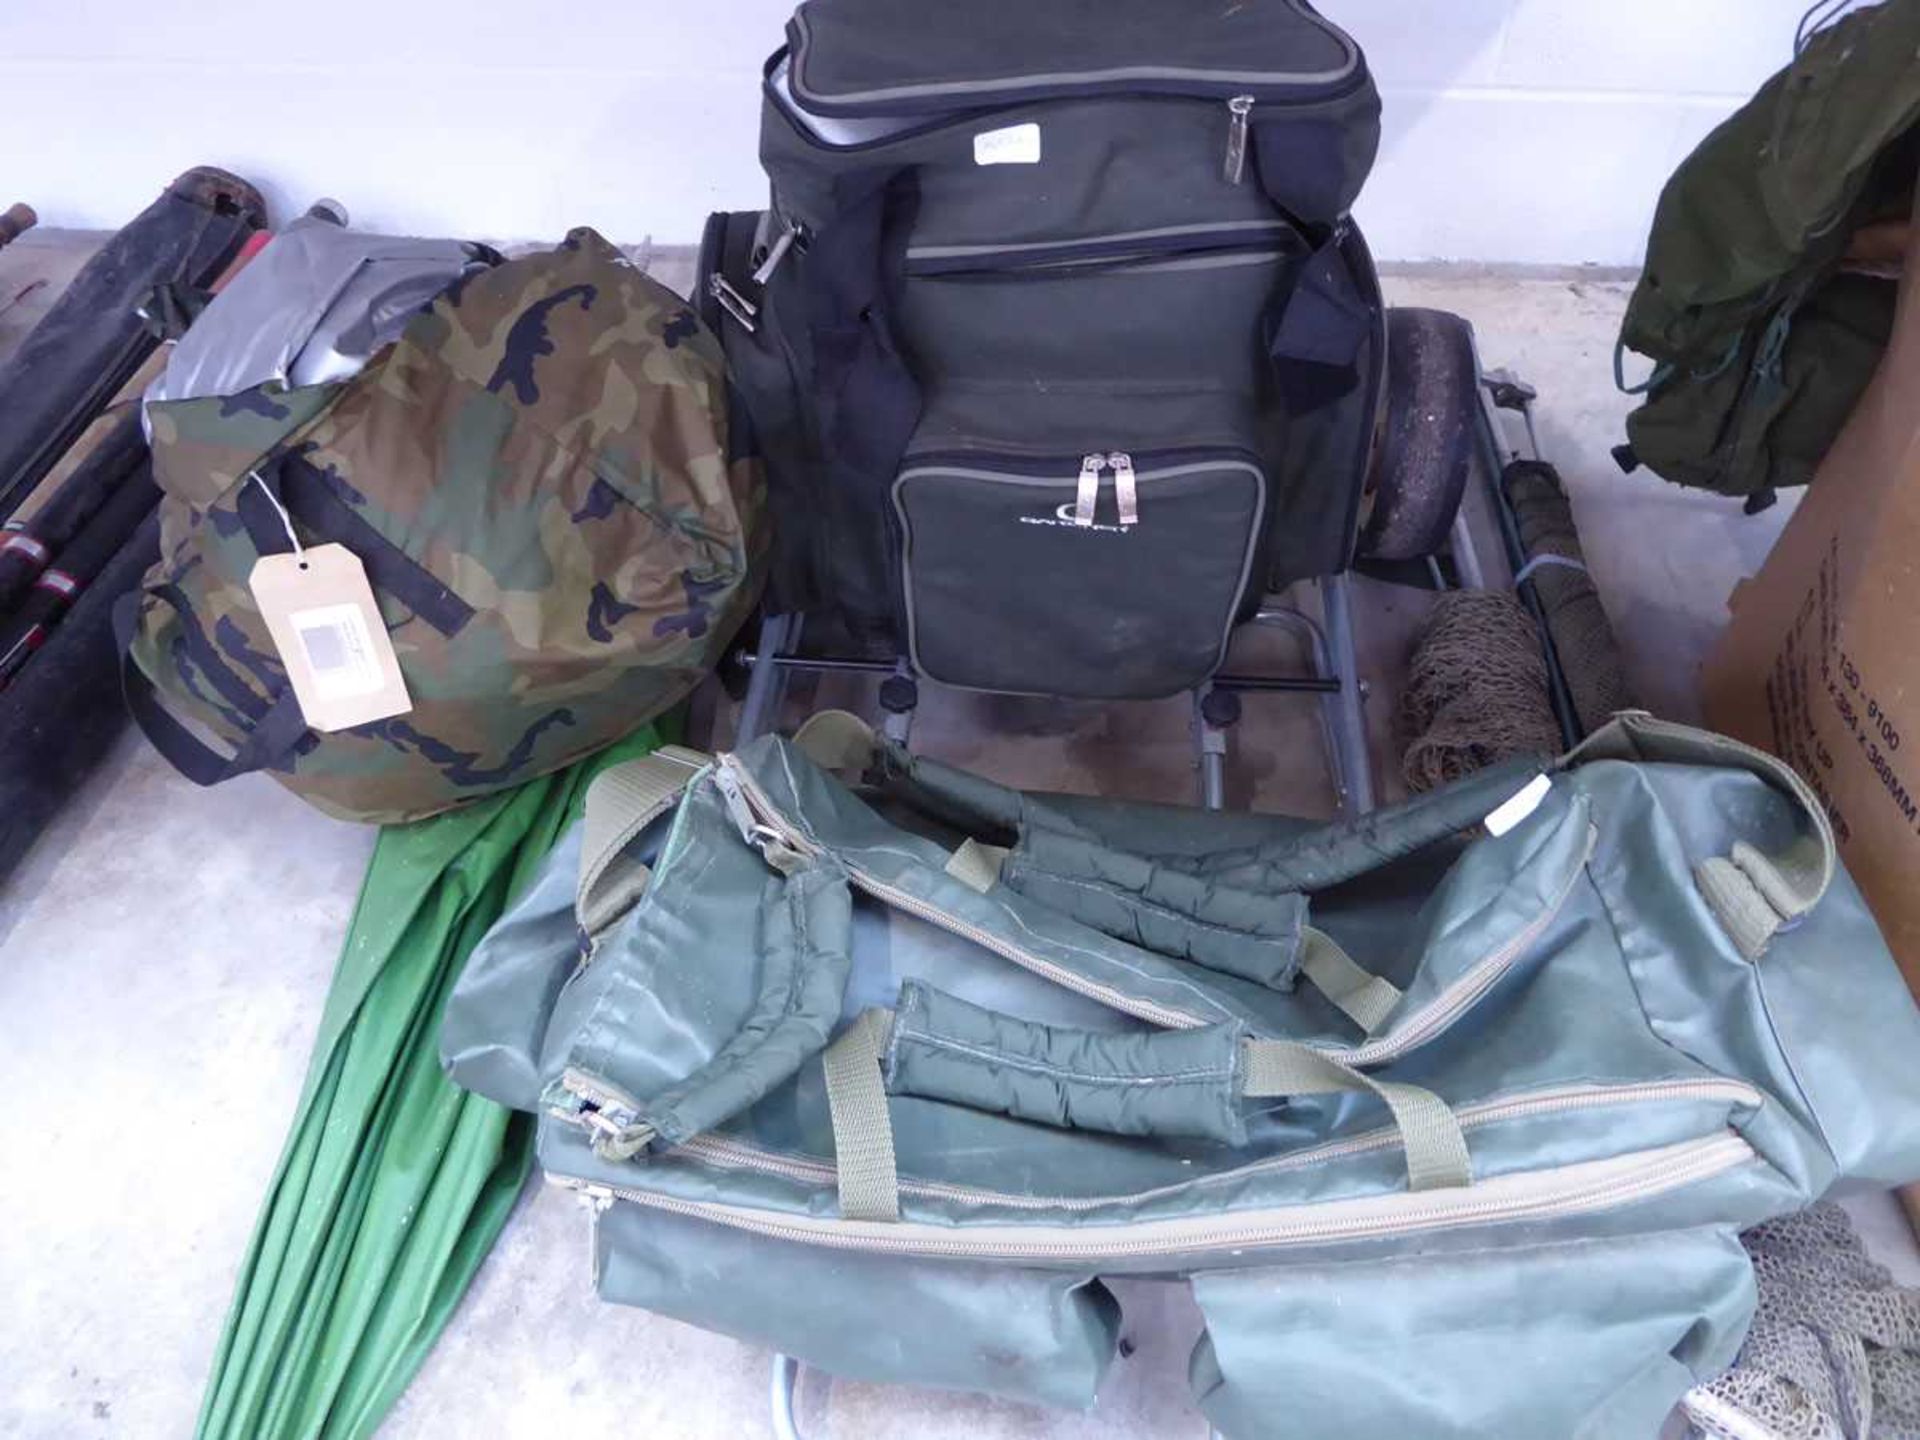 Gardner fishing backpack with green leatherette fishing bag, 2 wheel fishing trolley, umbrella, - Image 3 of 3